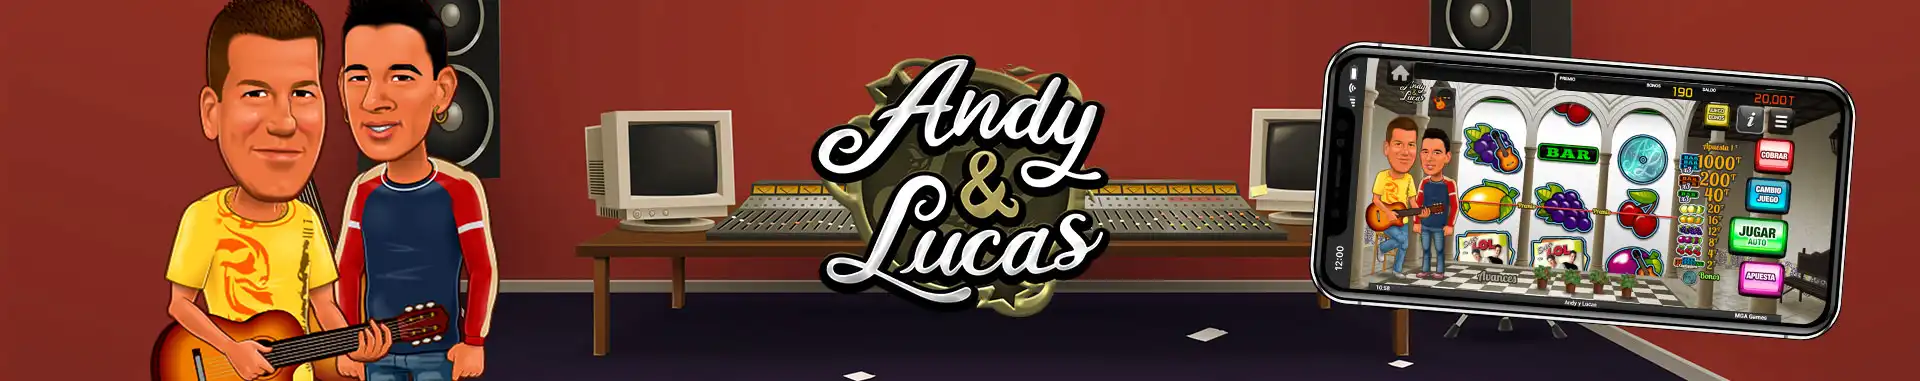 Tragaperras Online Andy & Lucas